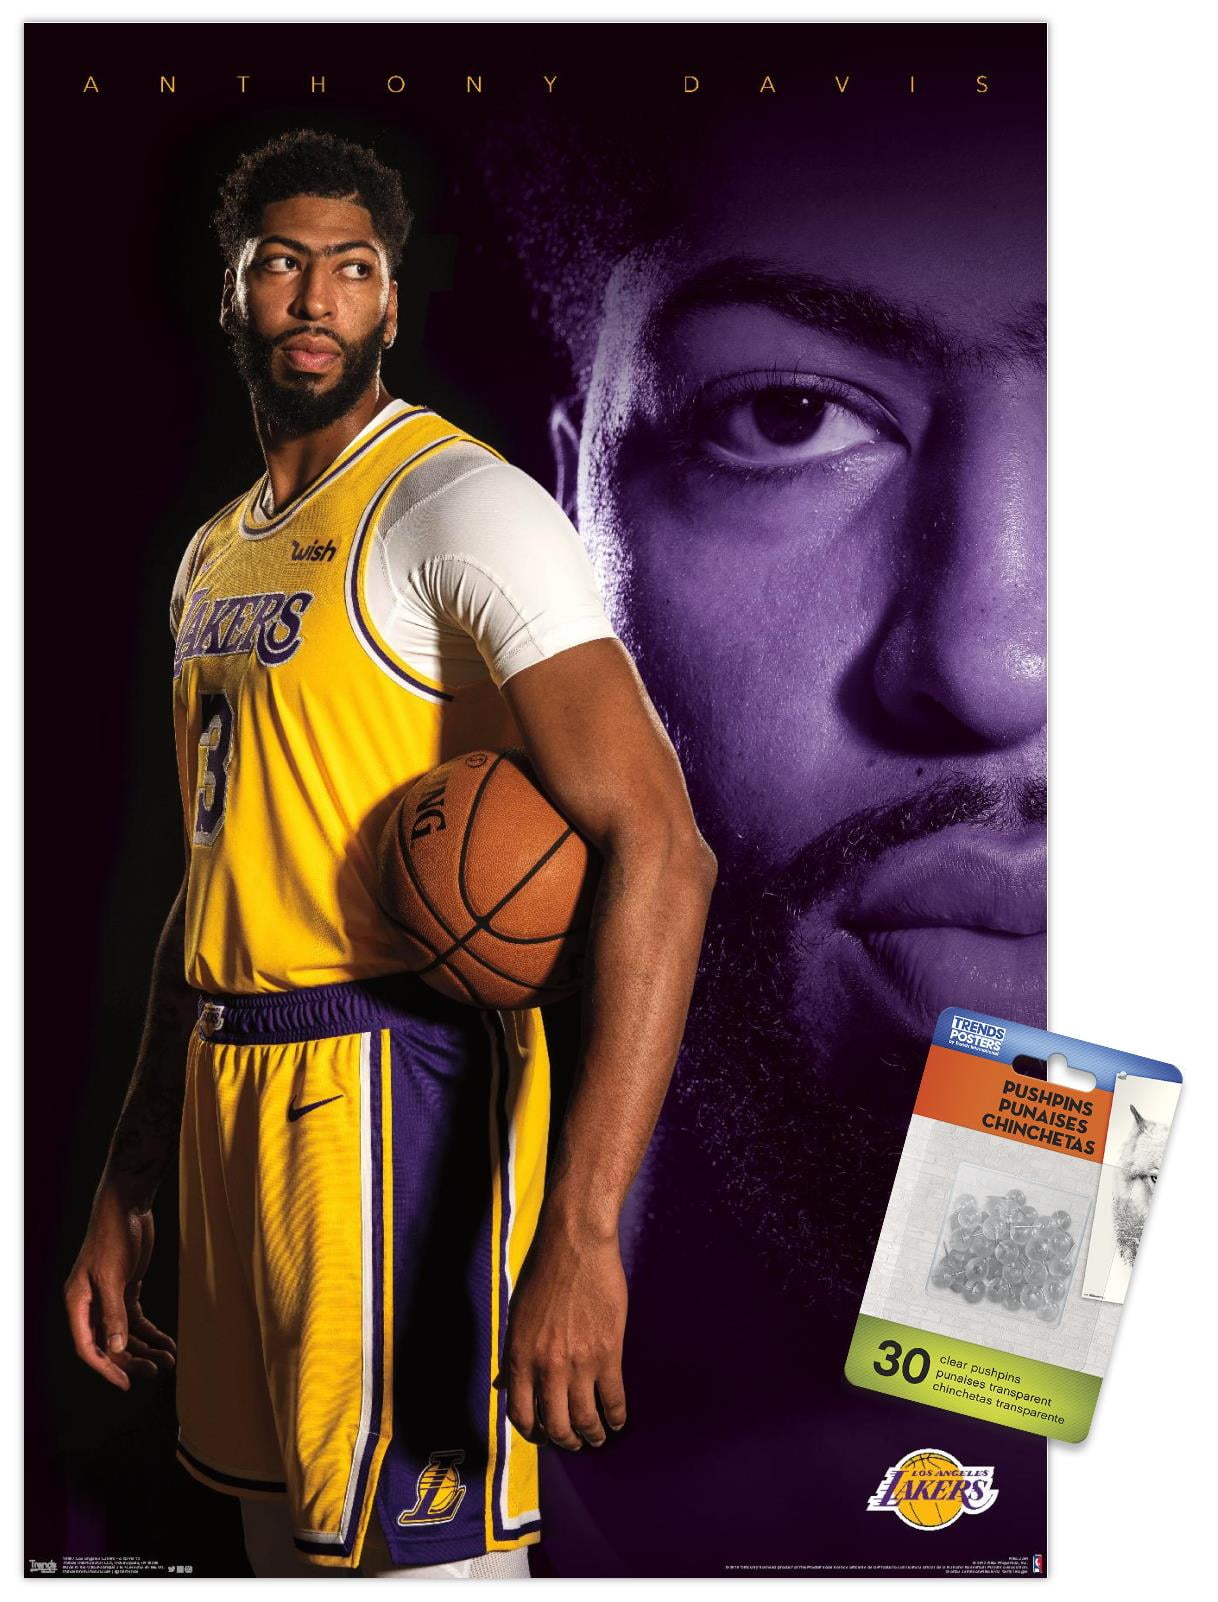 Pin on NBA Los Angeles Lakers